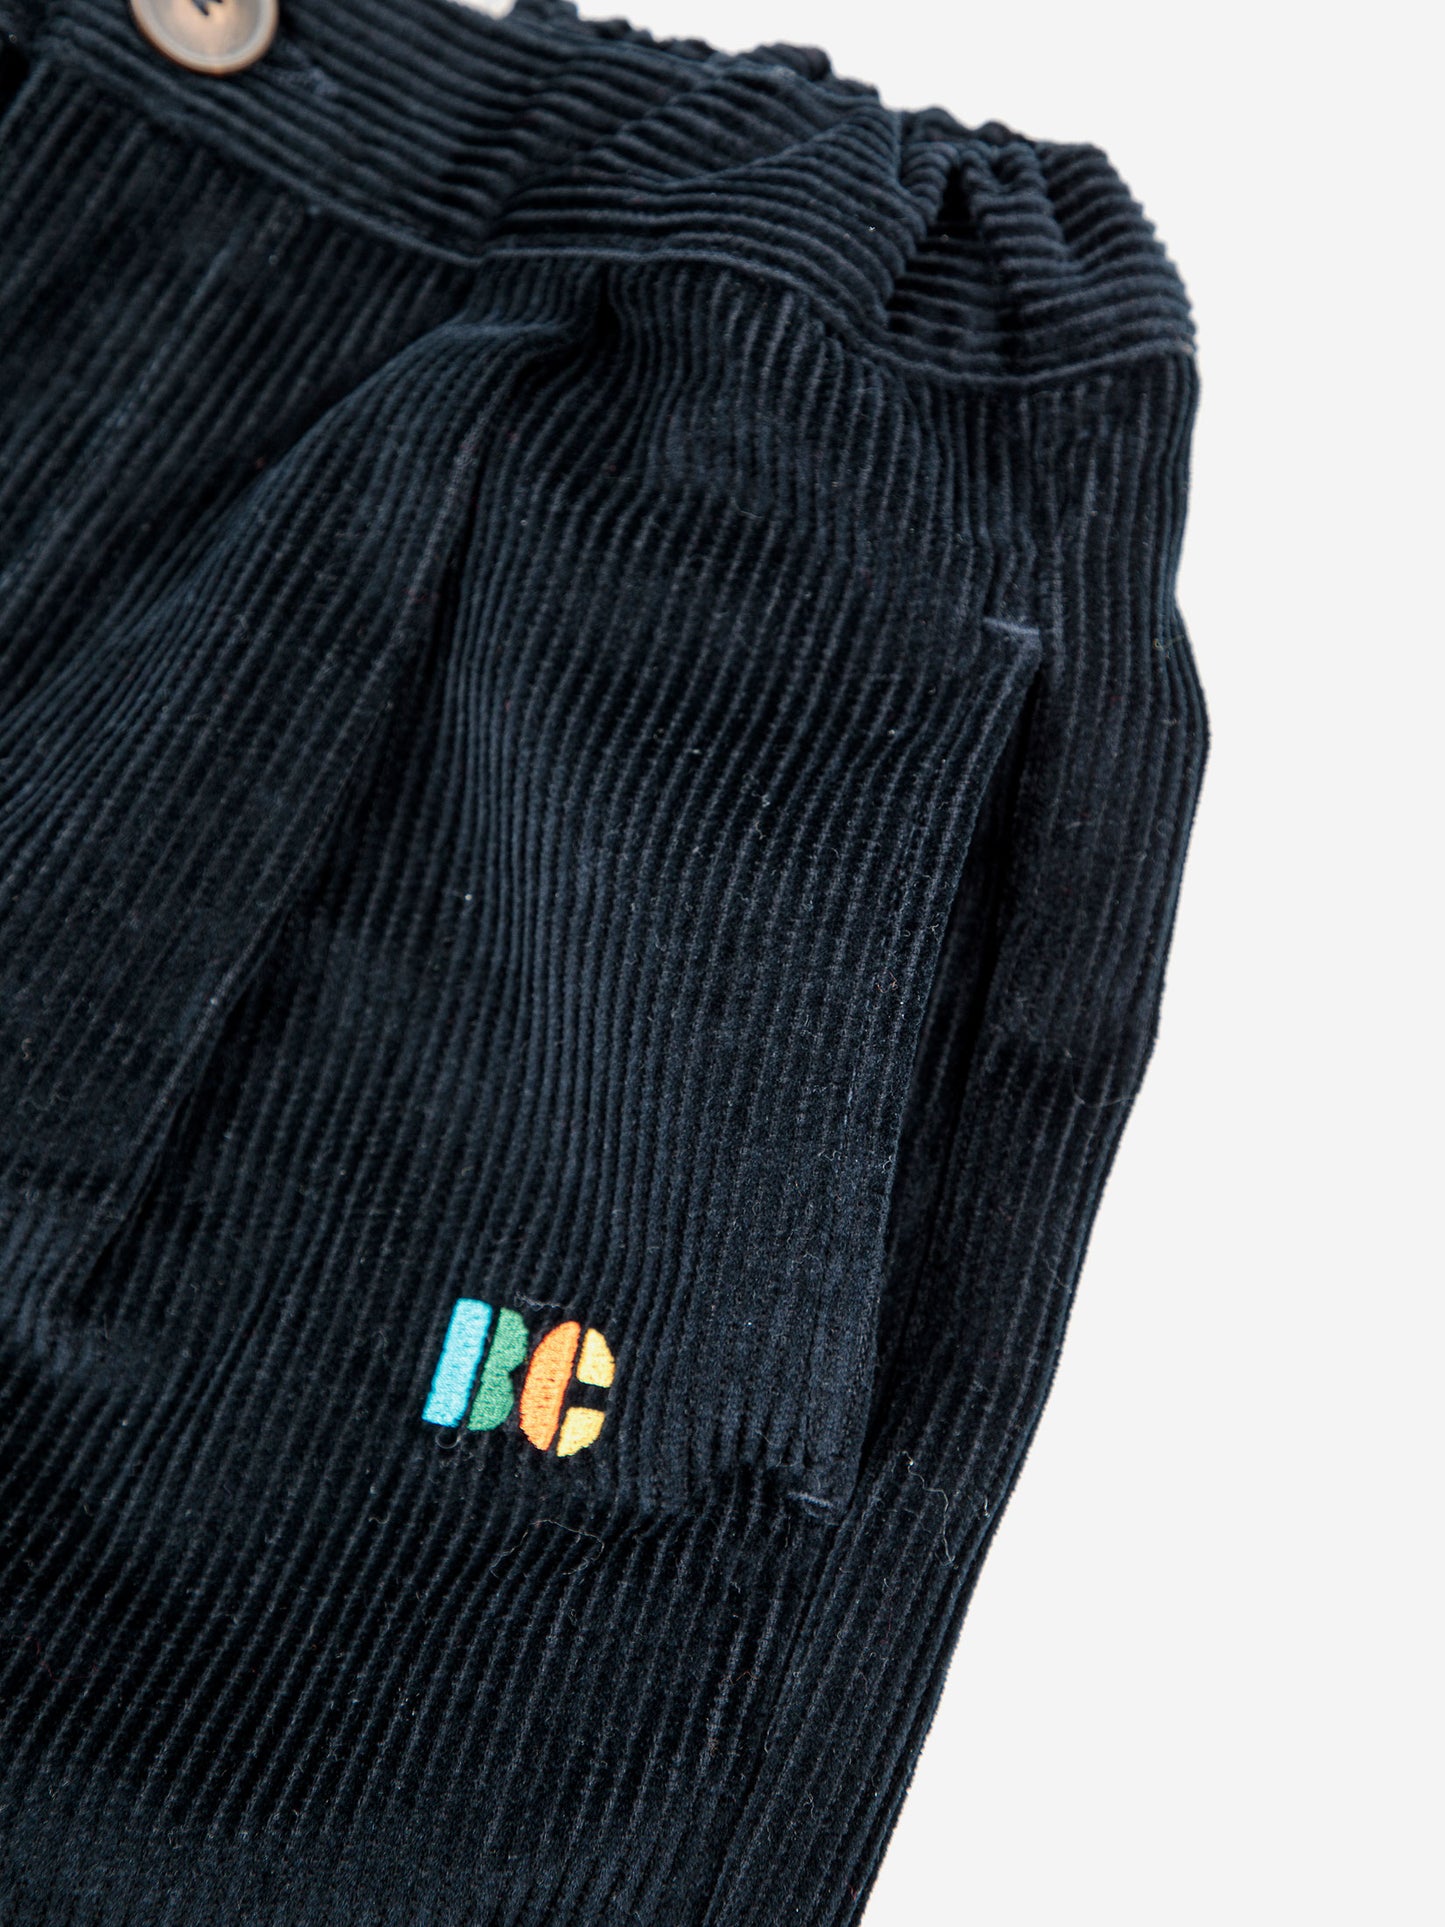 B.C embroidery baggy pants